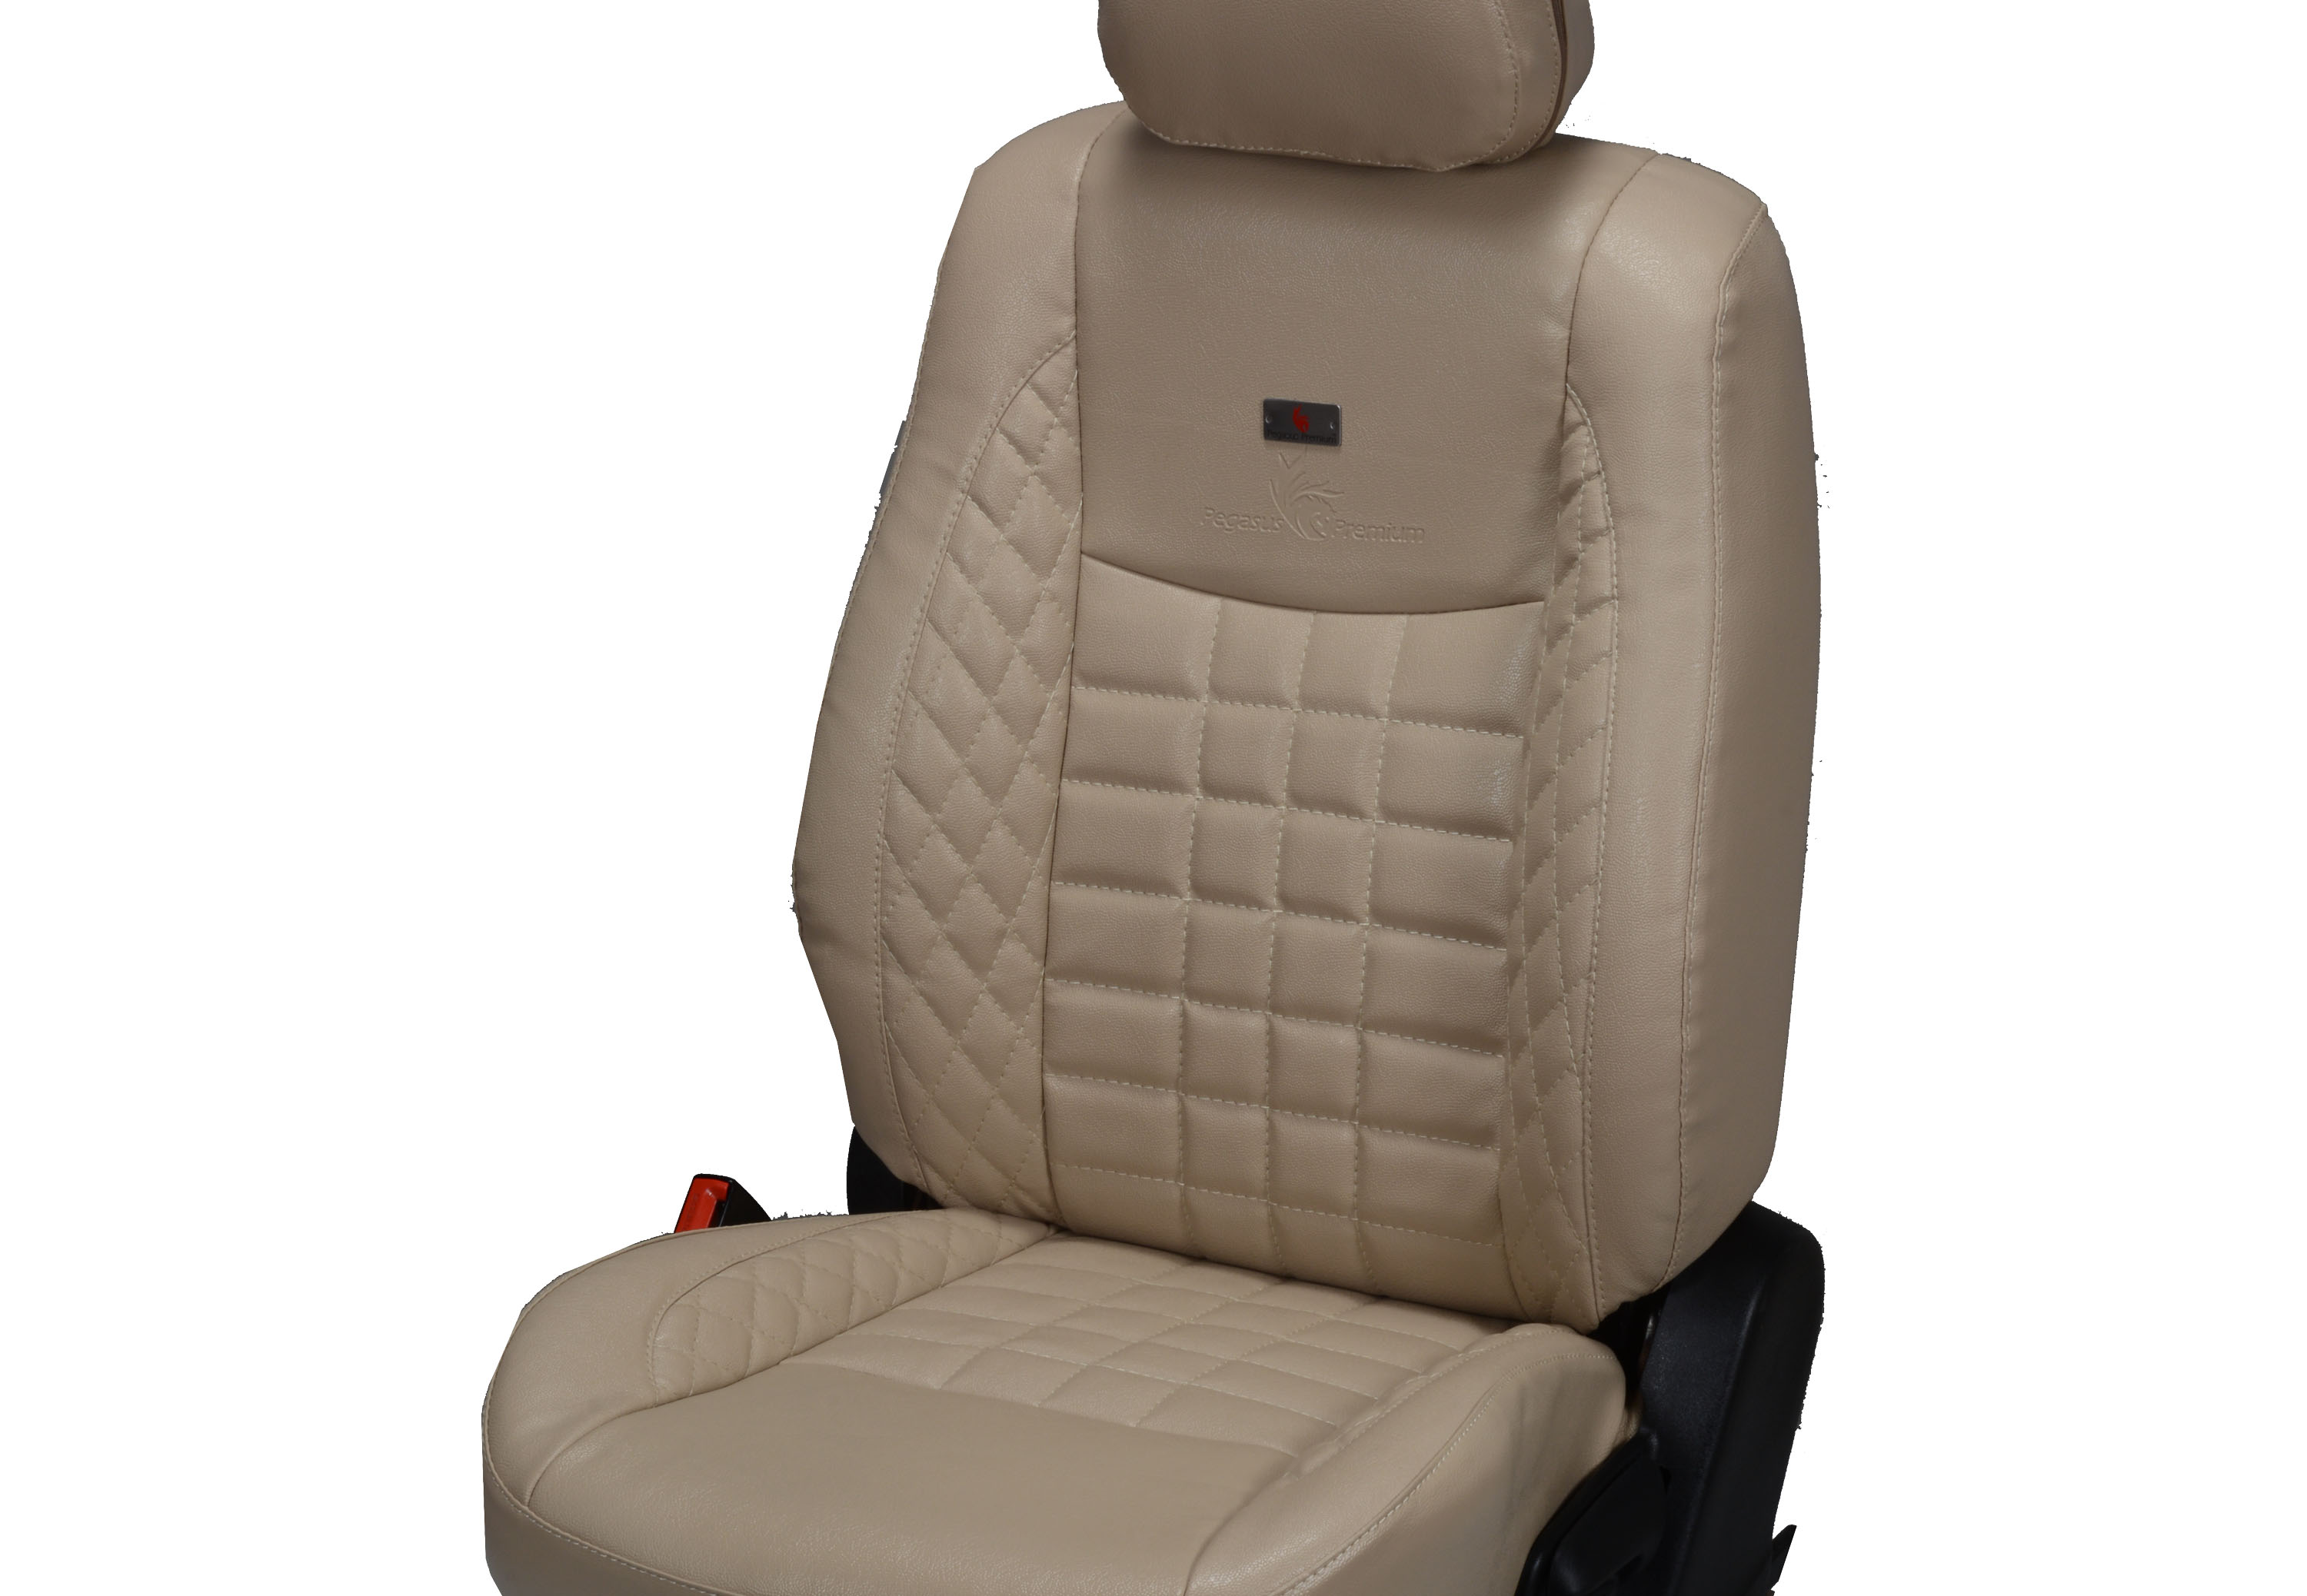 Buy Pegasus Premium PU Leather Car Seat Cover for Toyota Corolla Altis